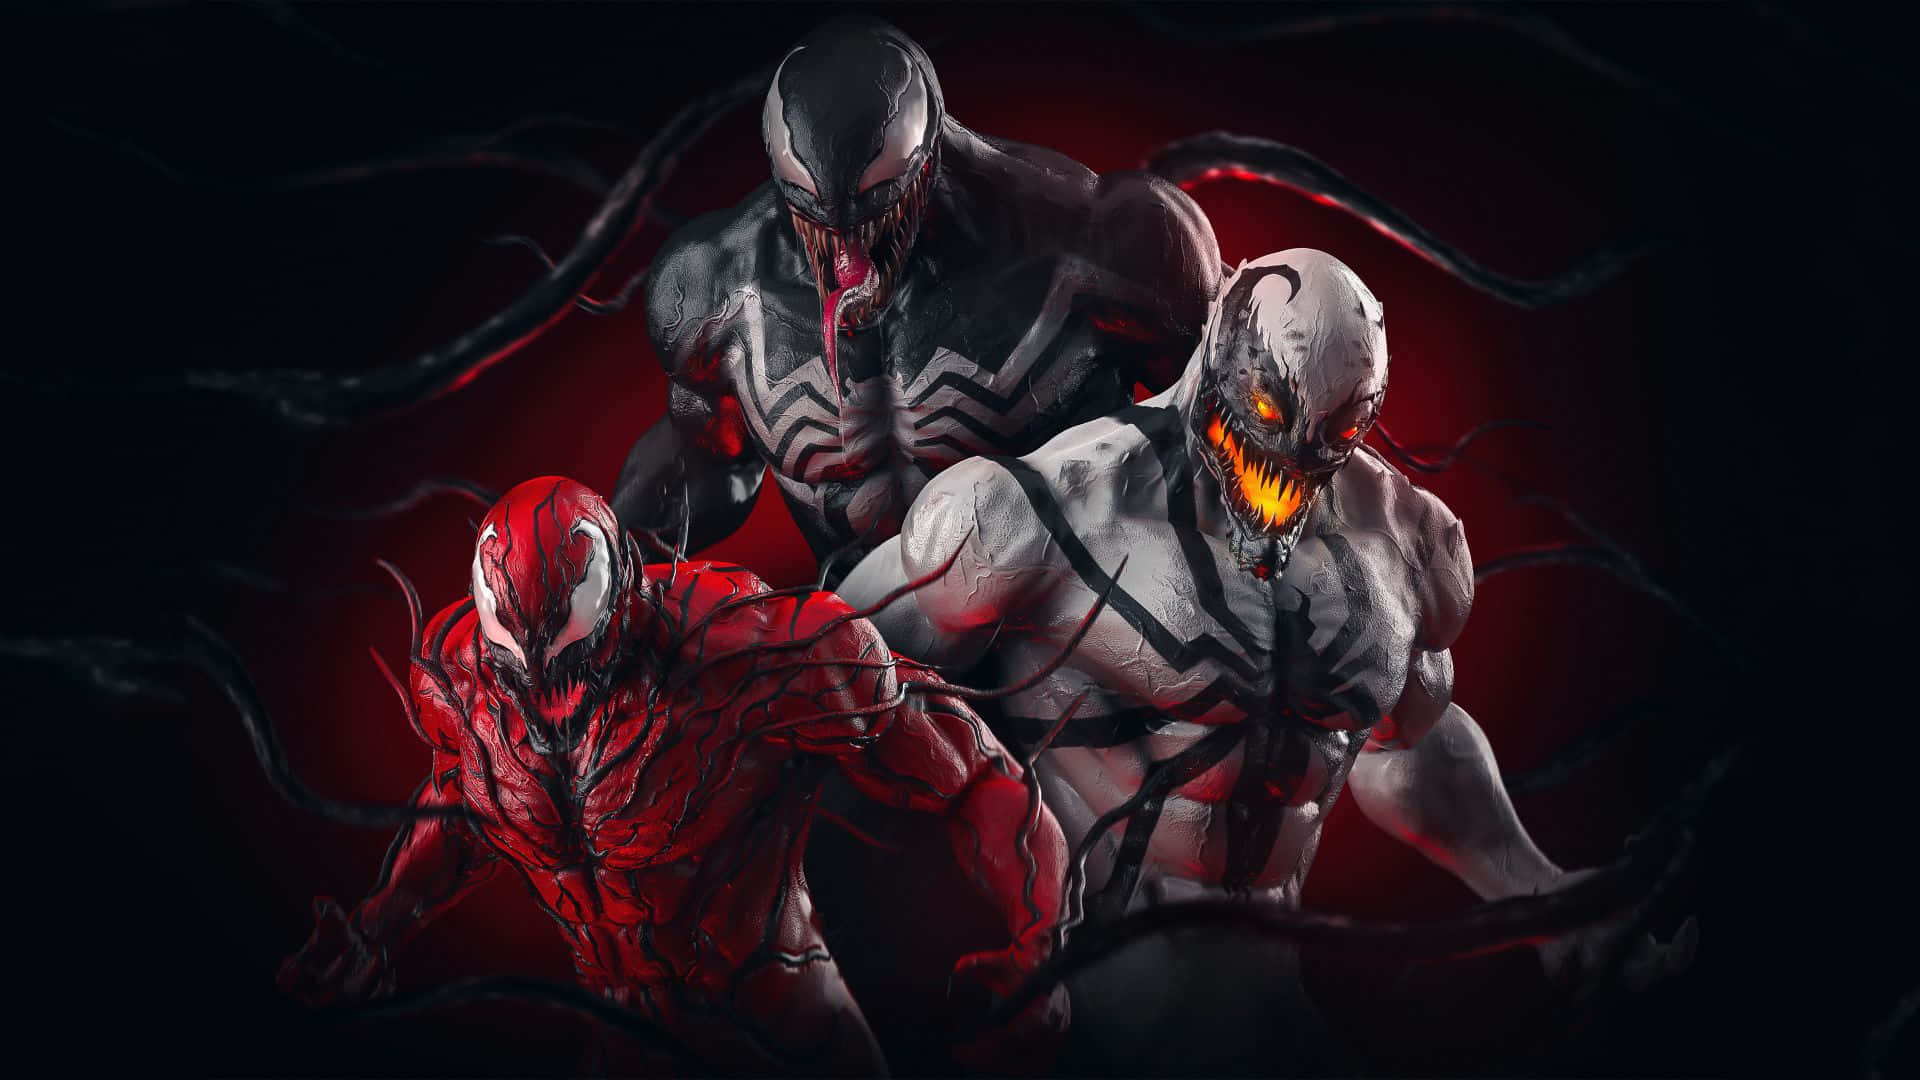 Epic battle - Venom faces Carnage in an intense battle! Wallpaper